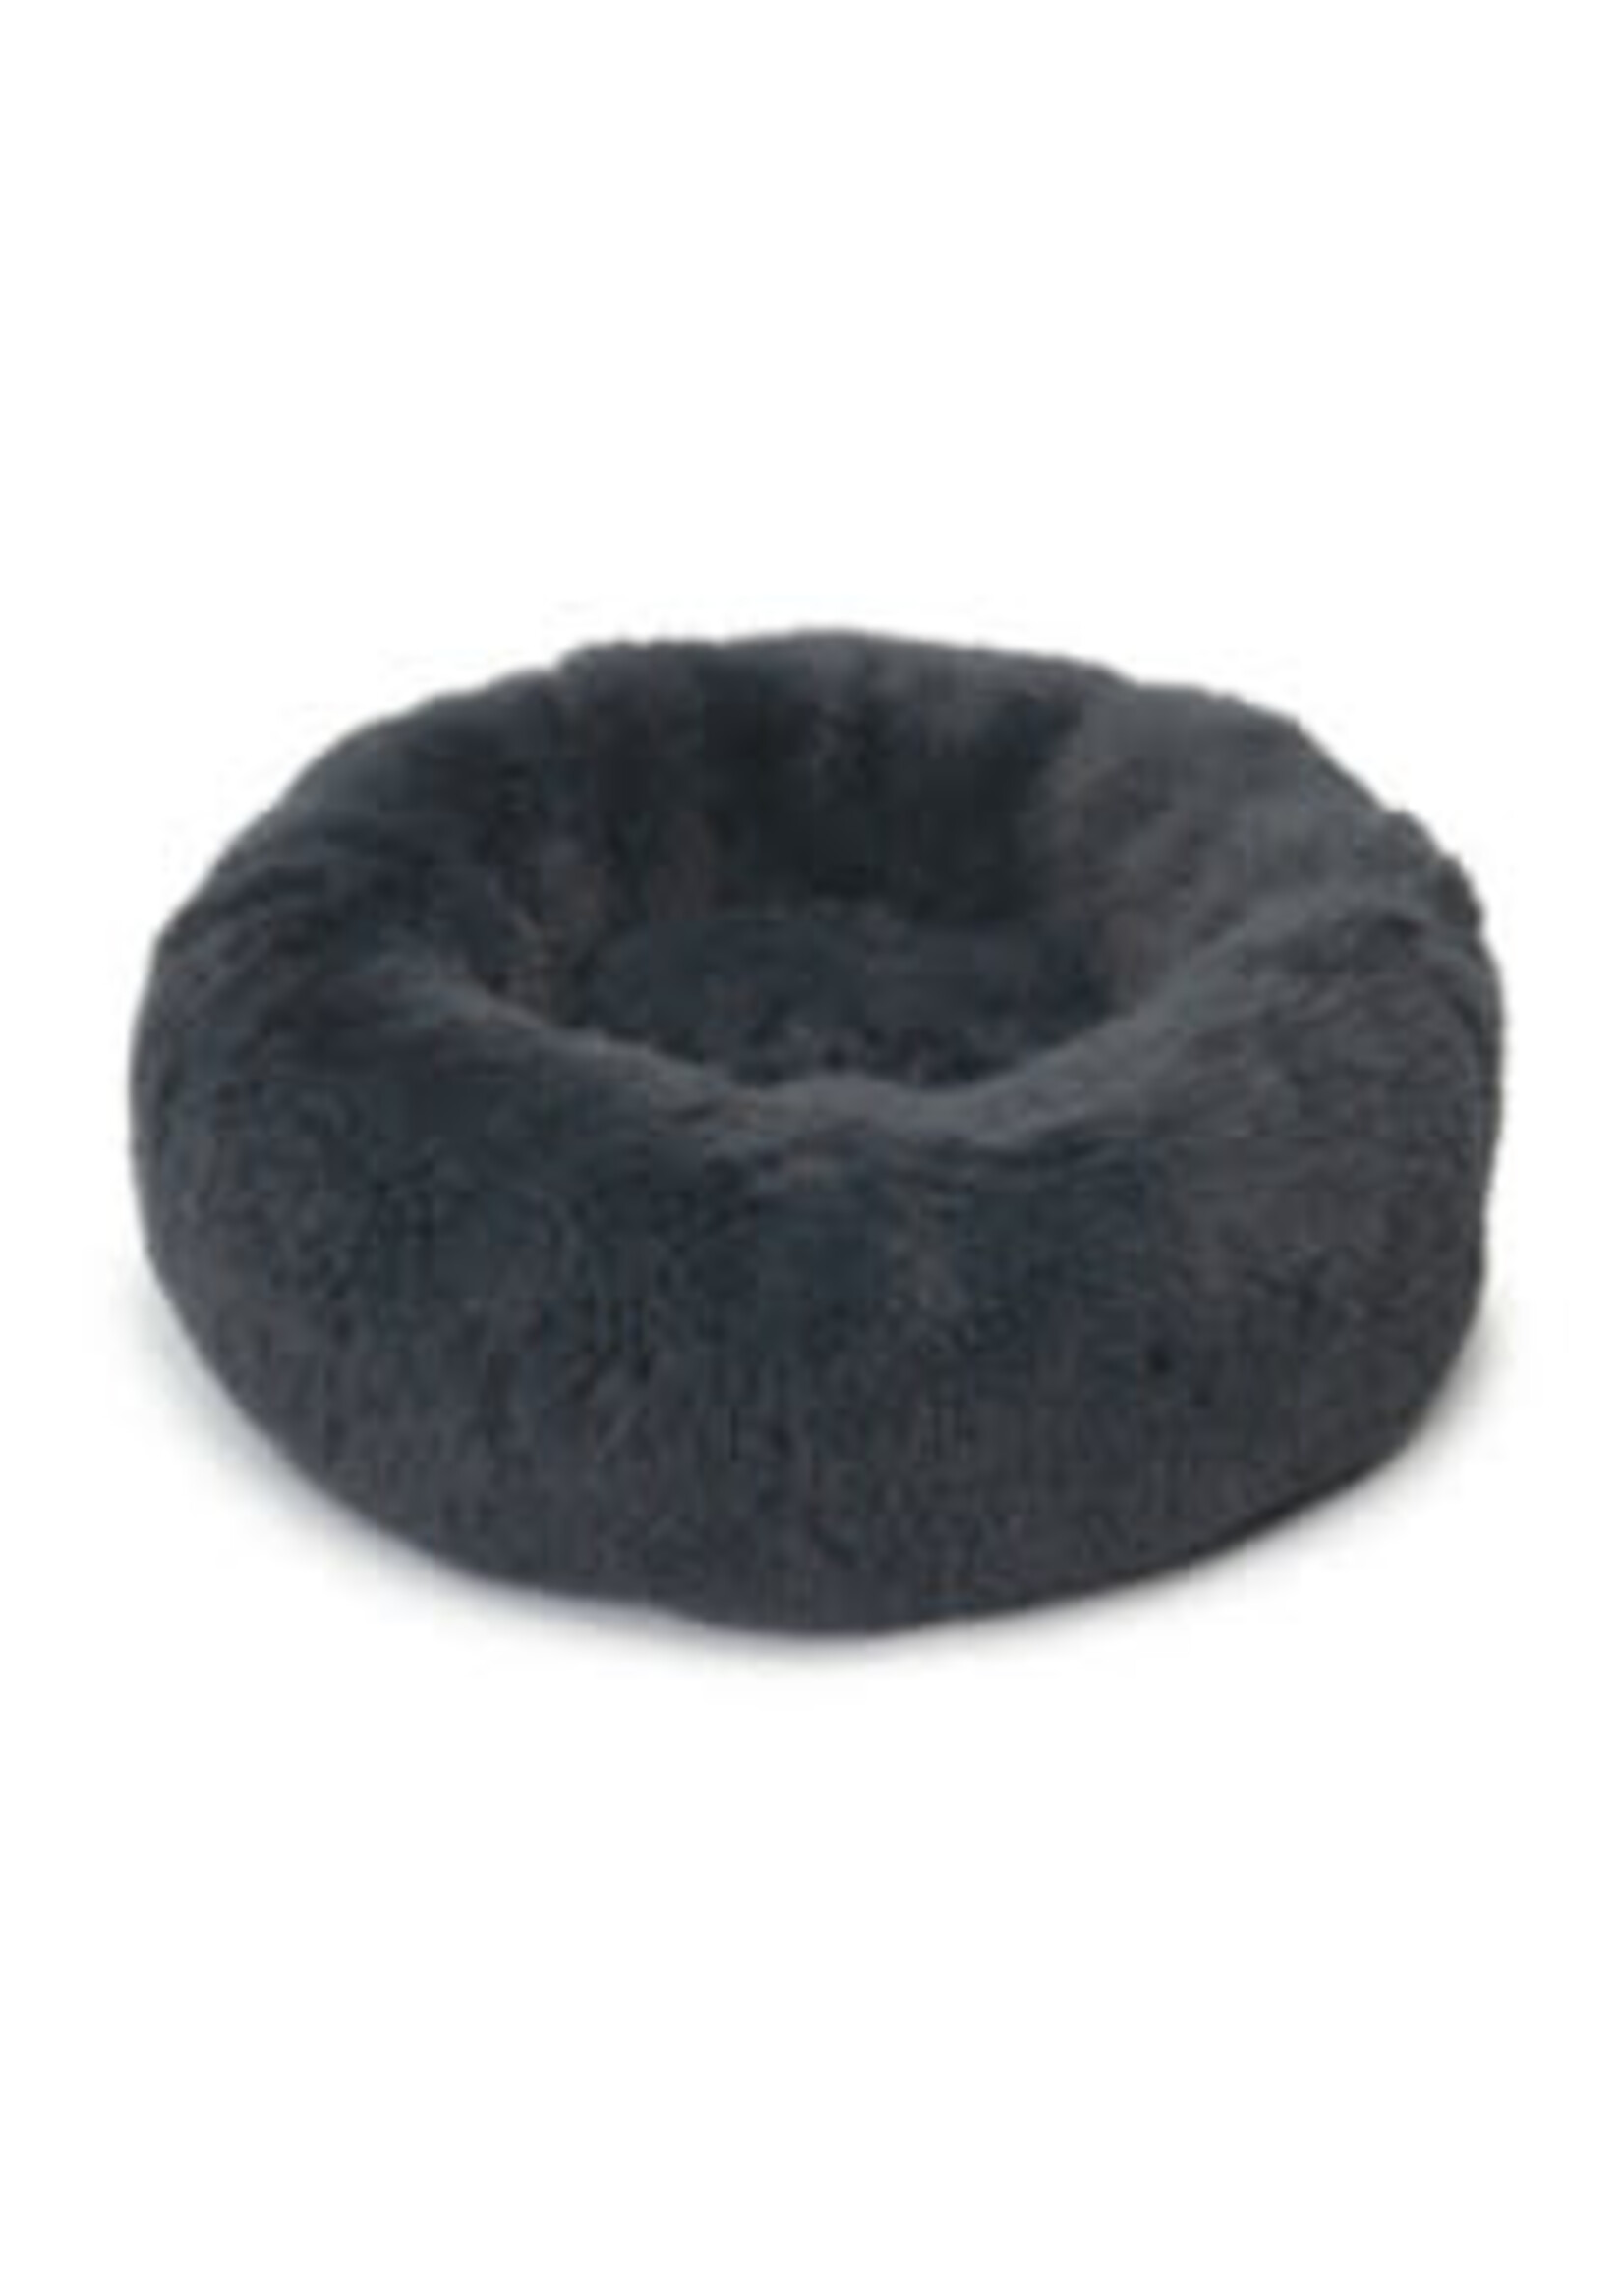 Catit Catit - Fluffy Bed - Dark Grey - 60 cm (20 in) diameter